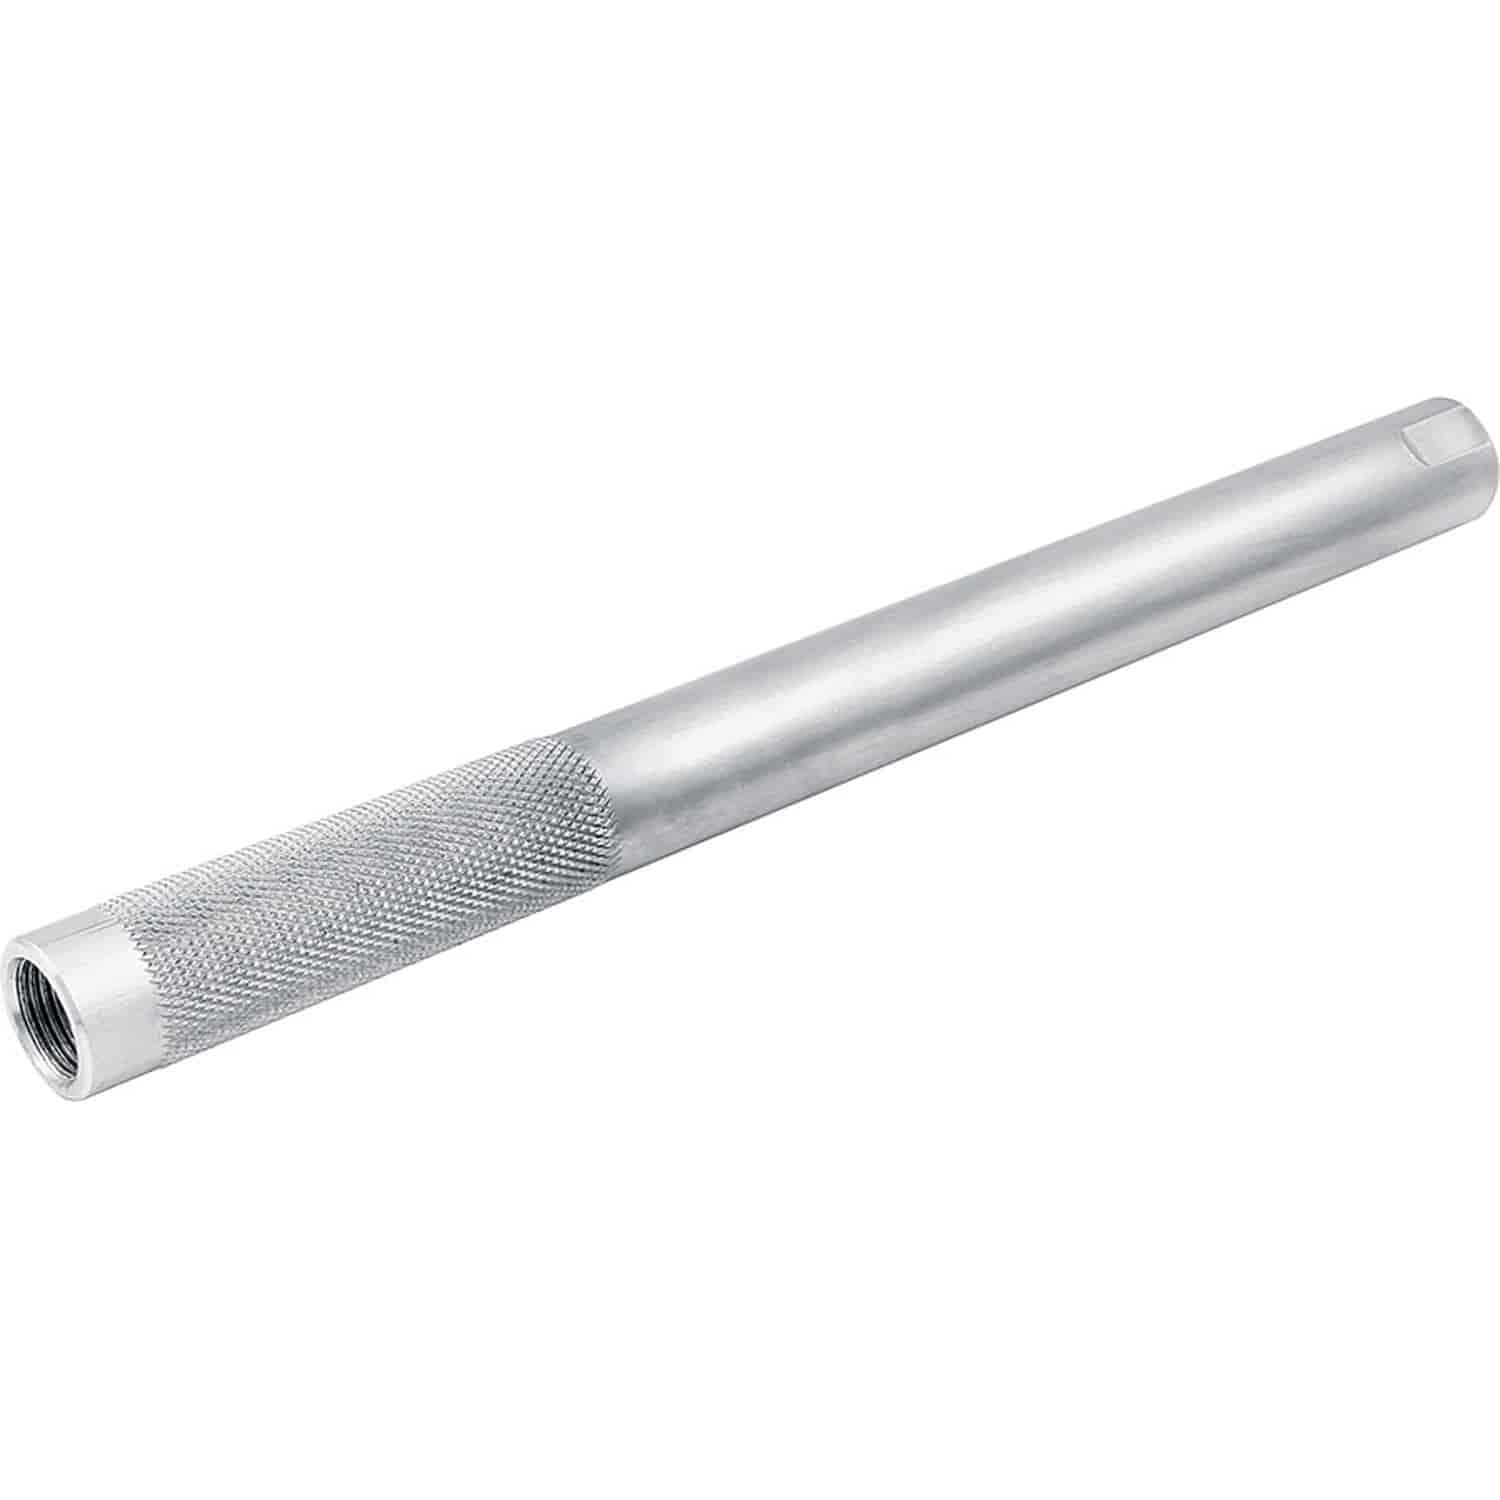 Swedged Aluminum Tie Rod Tube Length: 21"